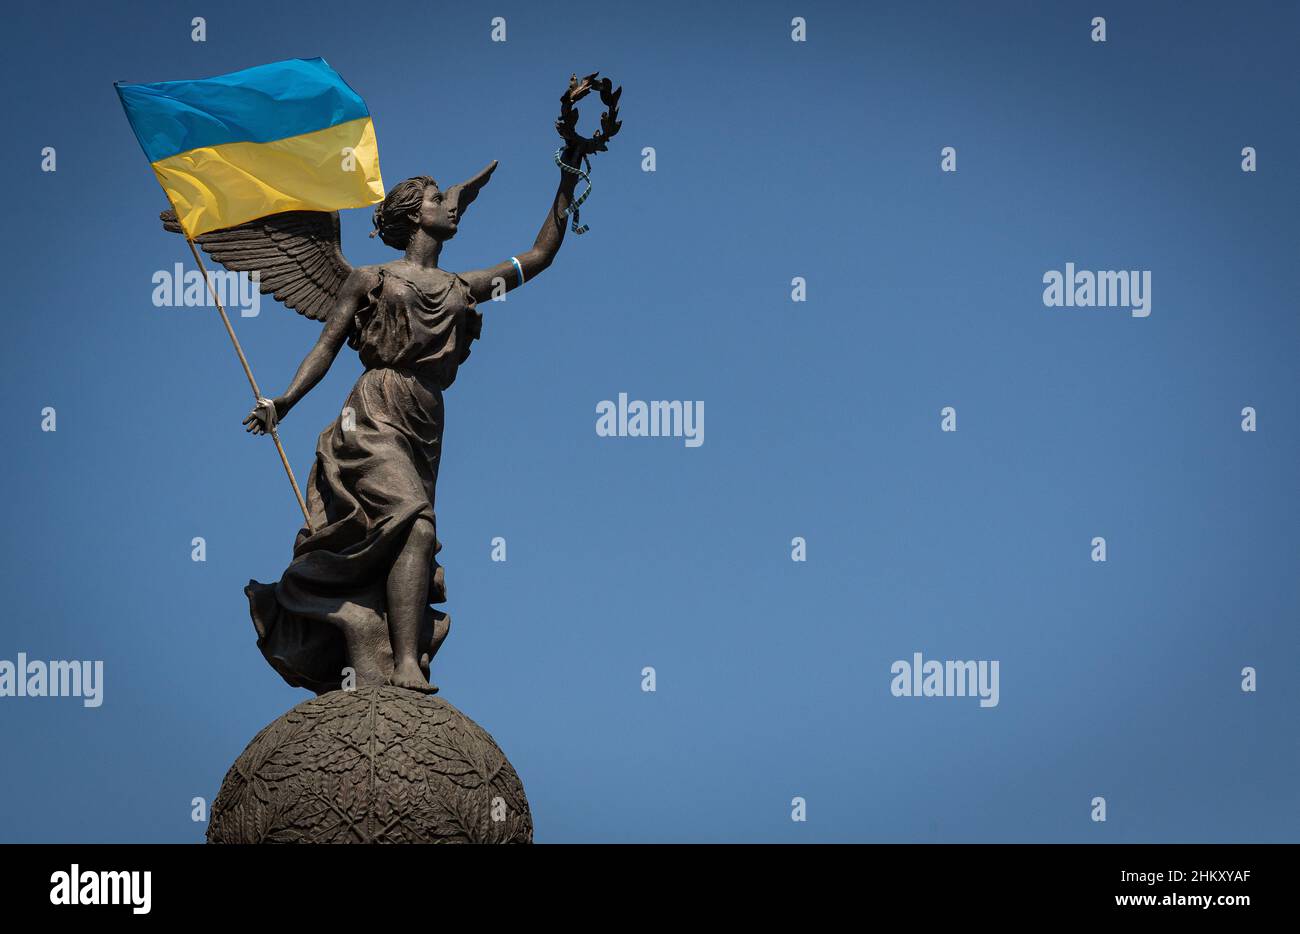 Ukrainian flag and statue in the city of Kharkiv, Ukraine. Stock Photo